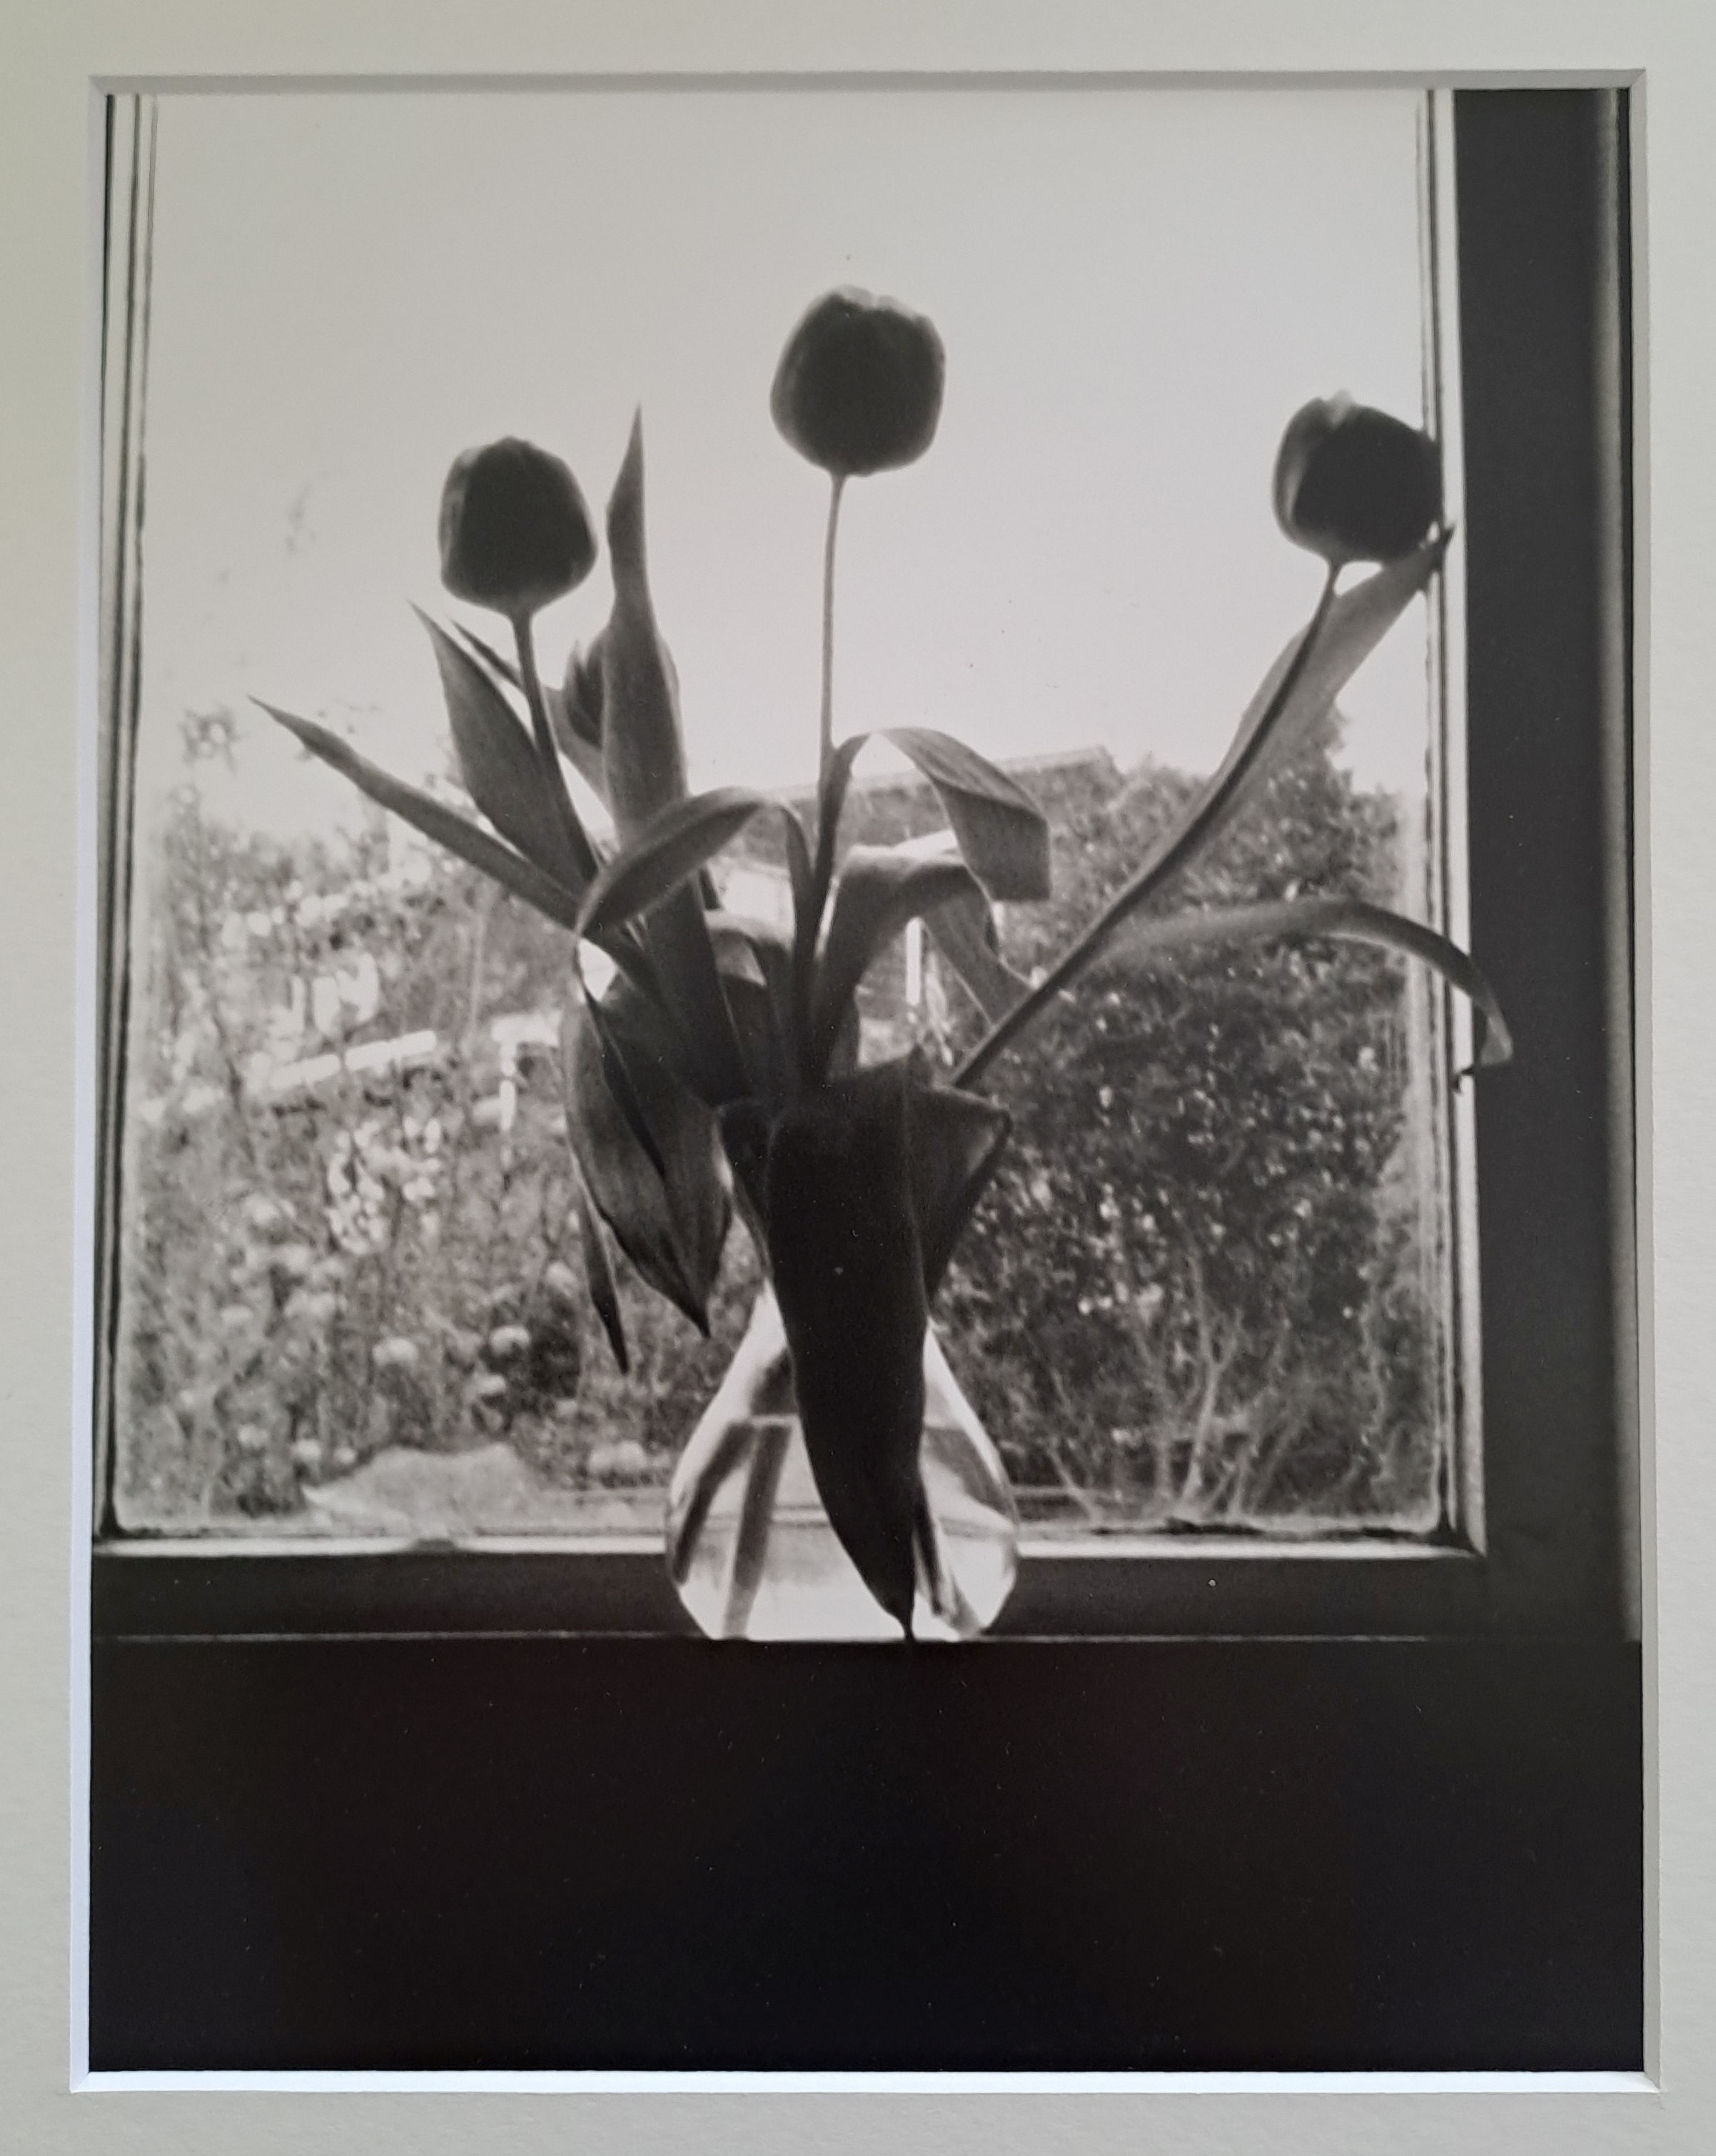 Black & White photograph.